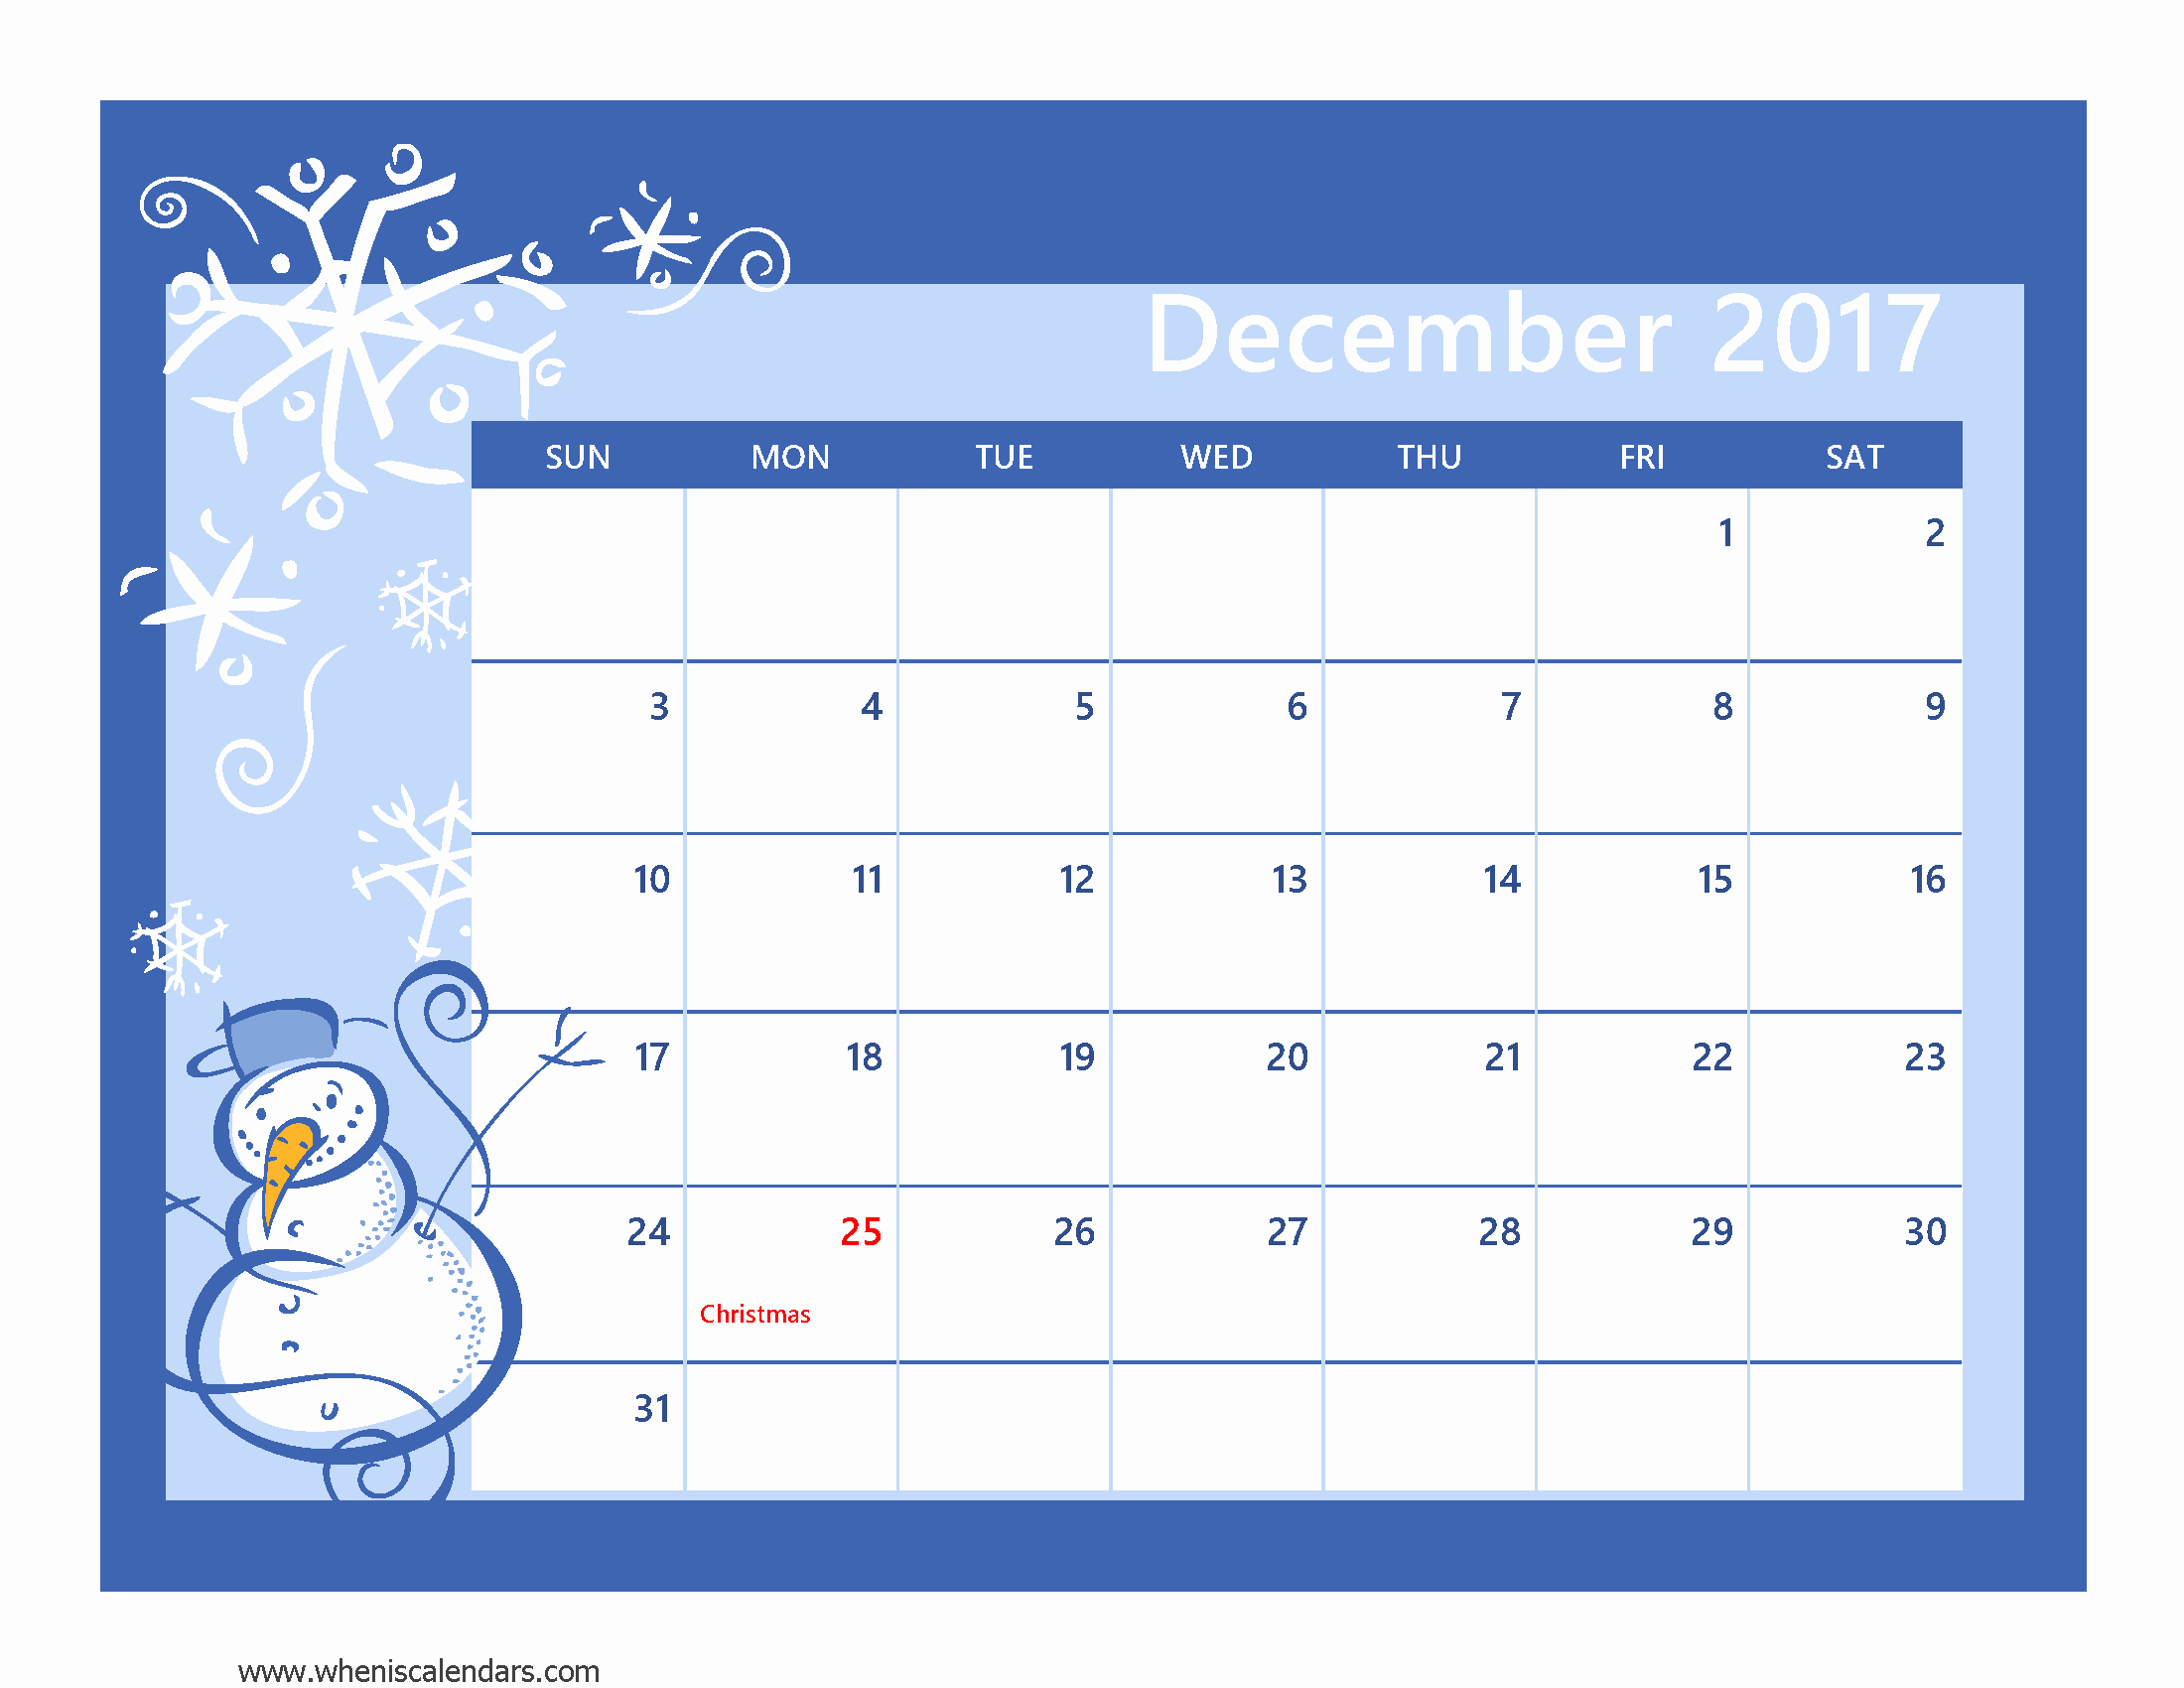 Calendar 2017 Template with Holidays Lovely December 2017 Calendar Template